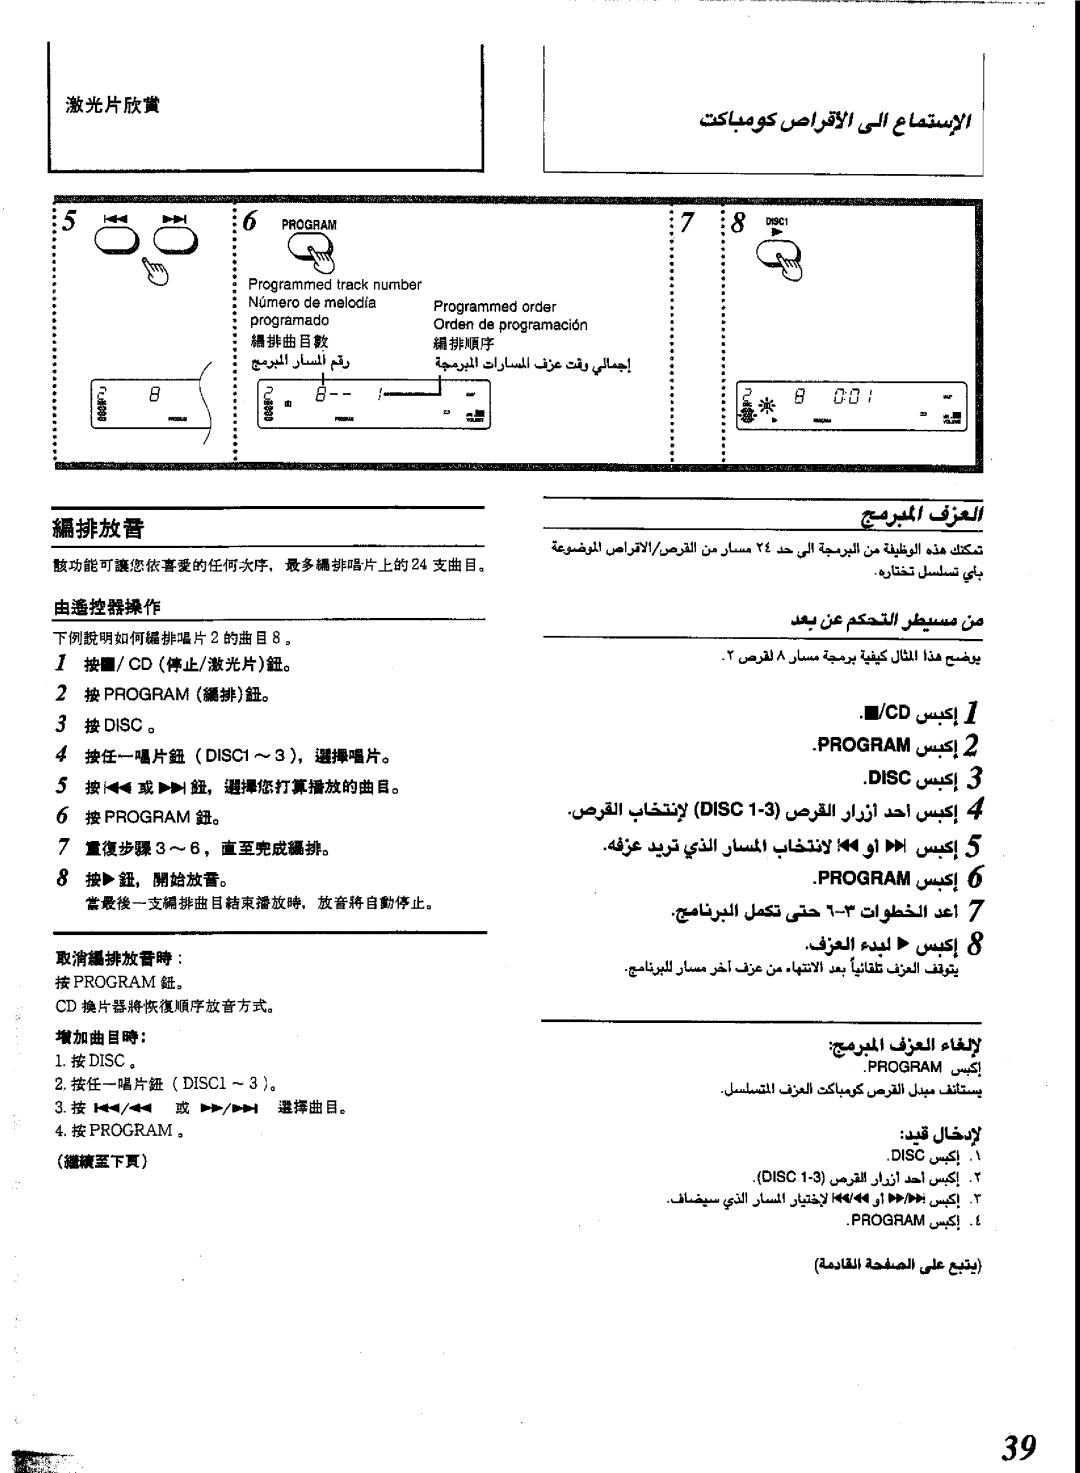 Panasonic SC-CH72, SC-CH73 manual 